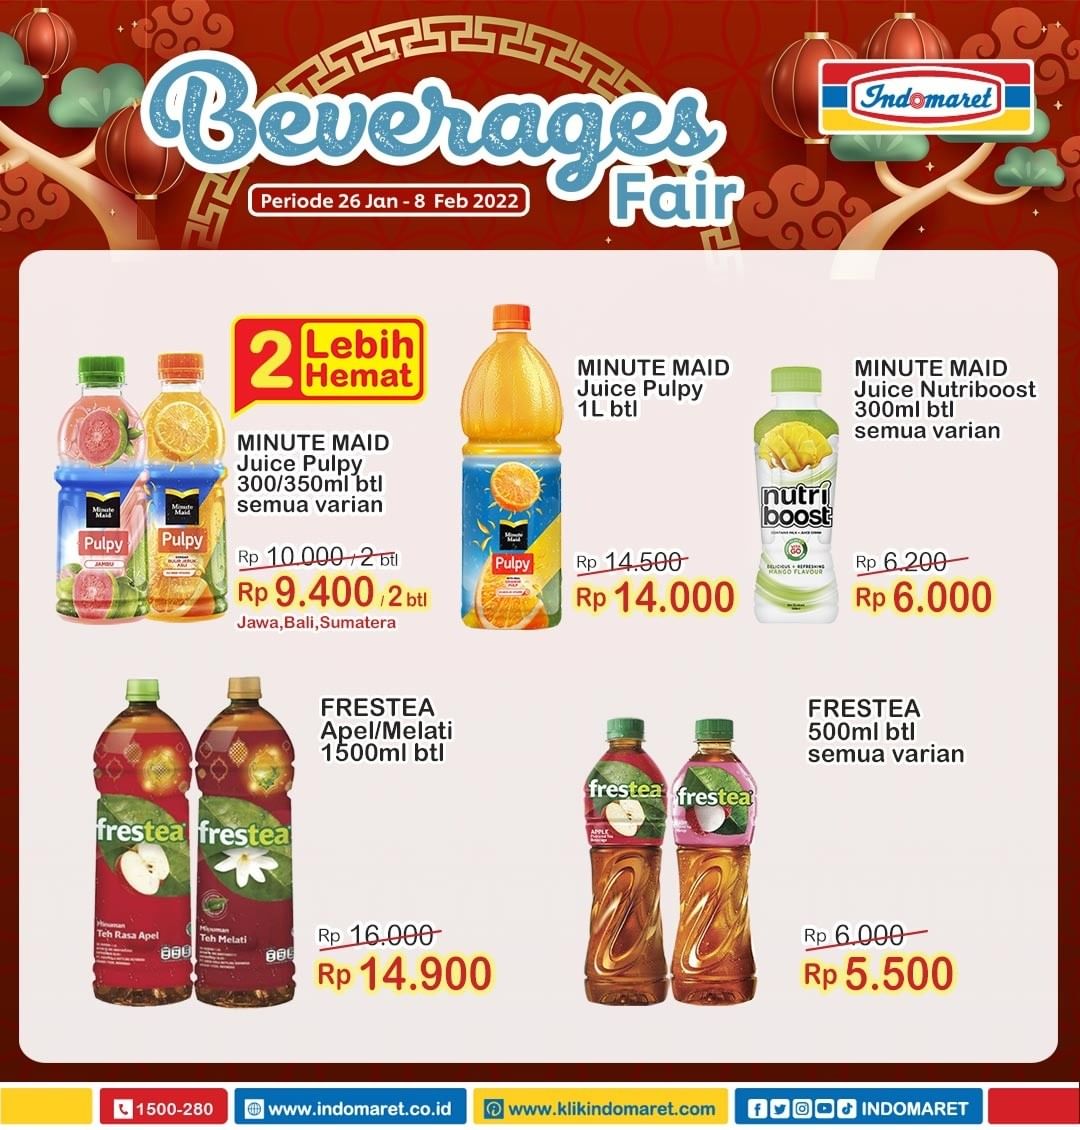 Indomaret Beverage Fair : Coca Cola Fanta Sprite 1500ml Rp.25.000/ 2 Btl , Minute Maid 1L Rp.14.000 , dll (sd 08 Feb 2022)